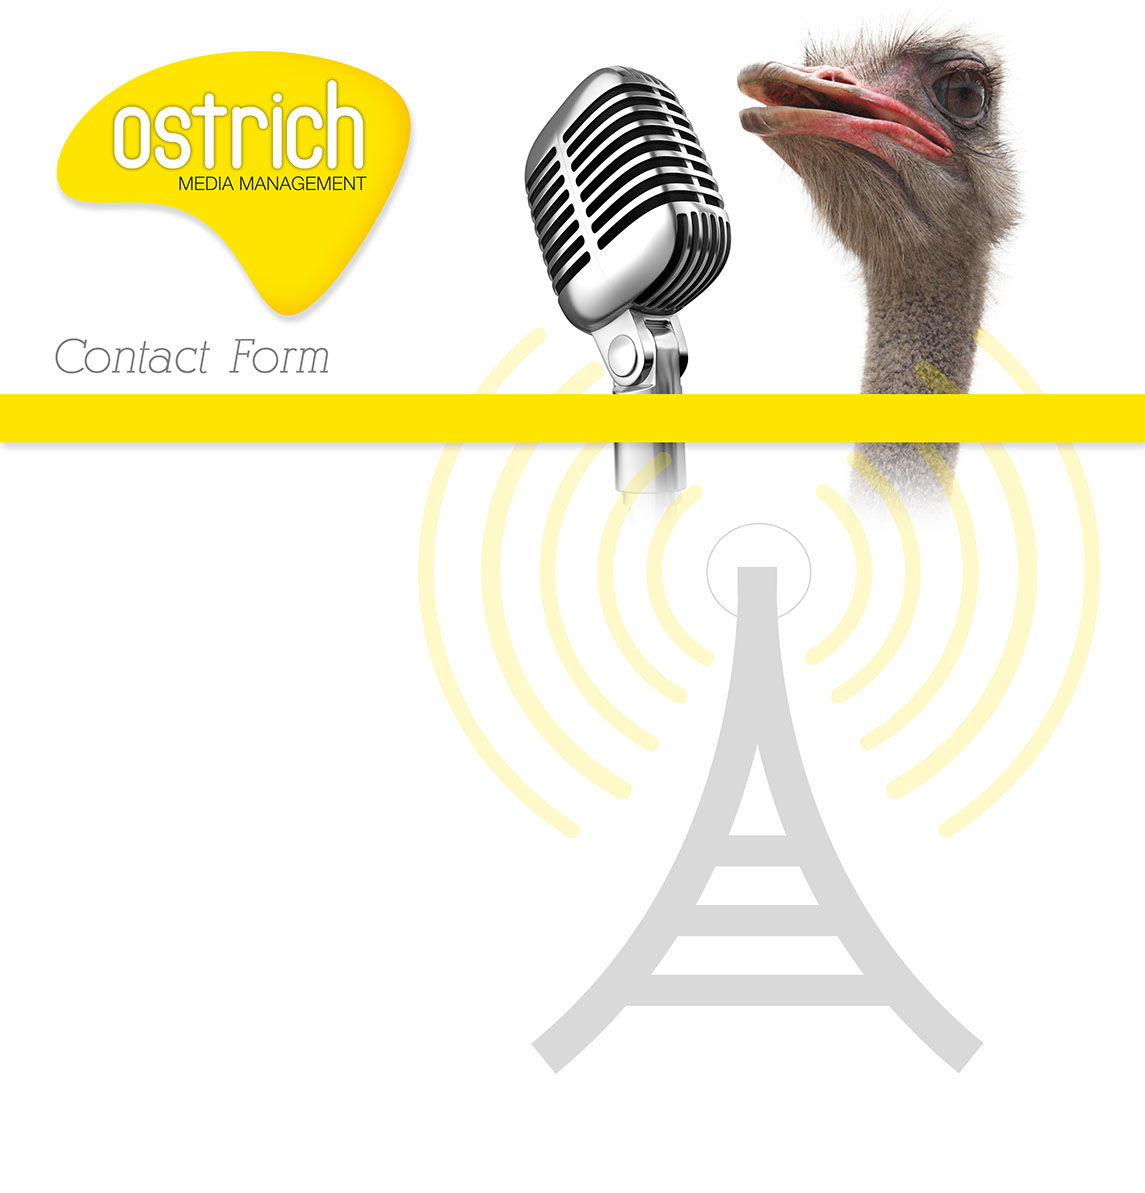 Ostrich Media Management Contact Form